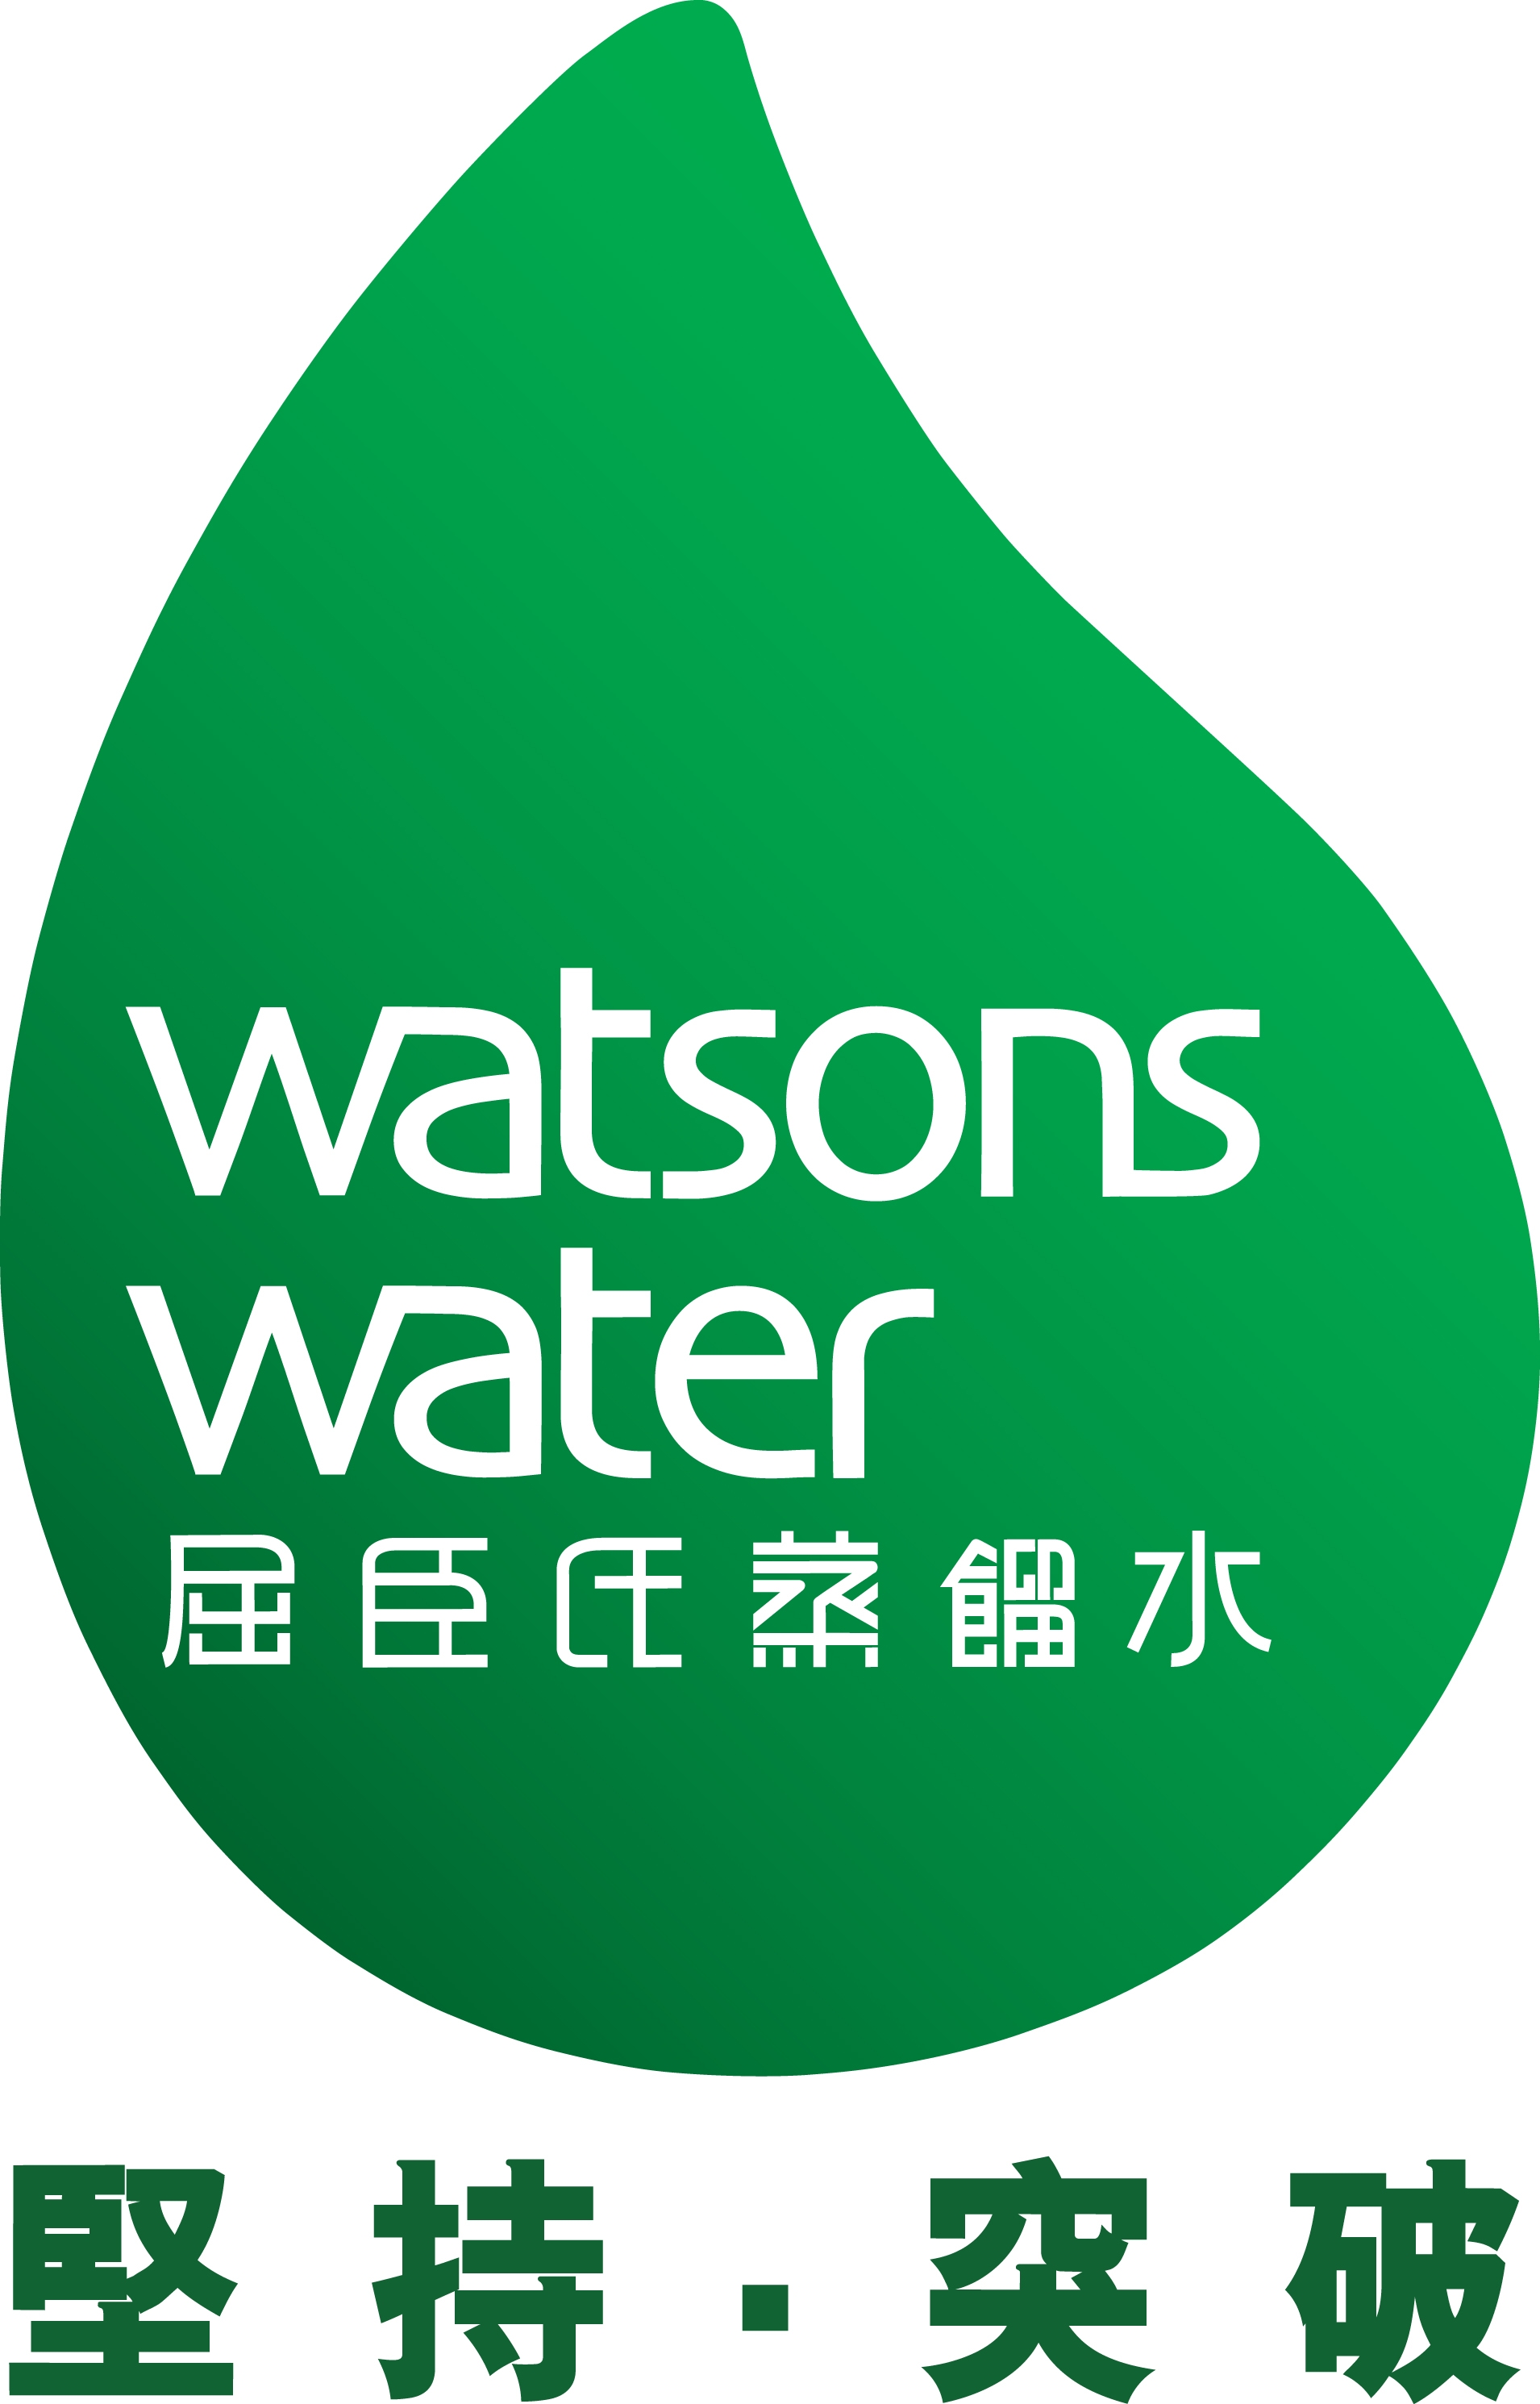 Watsons Water new logo_persistency breakthrough